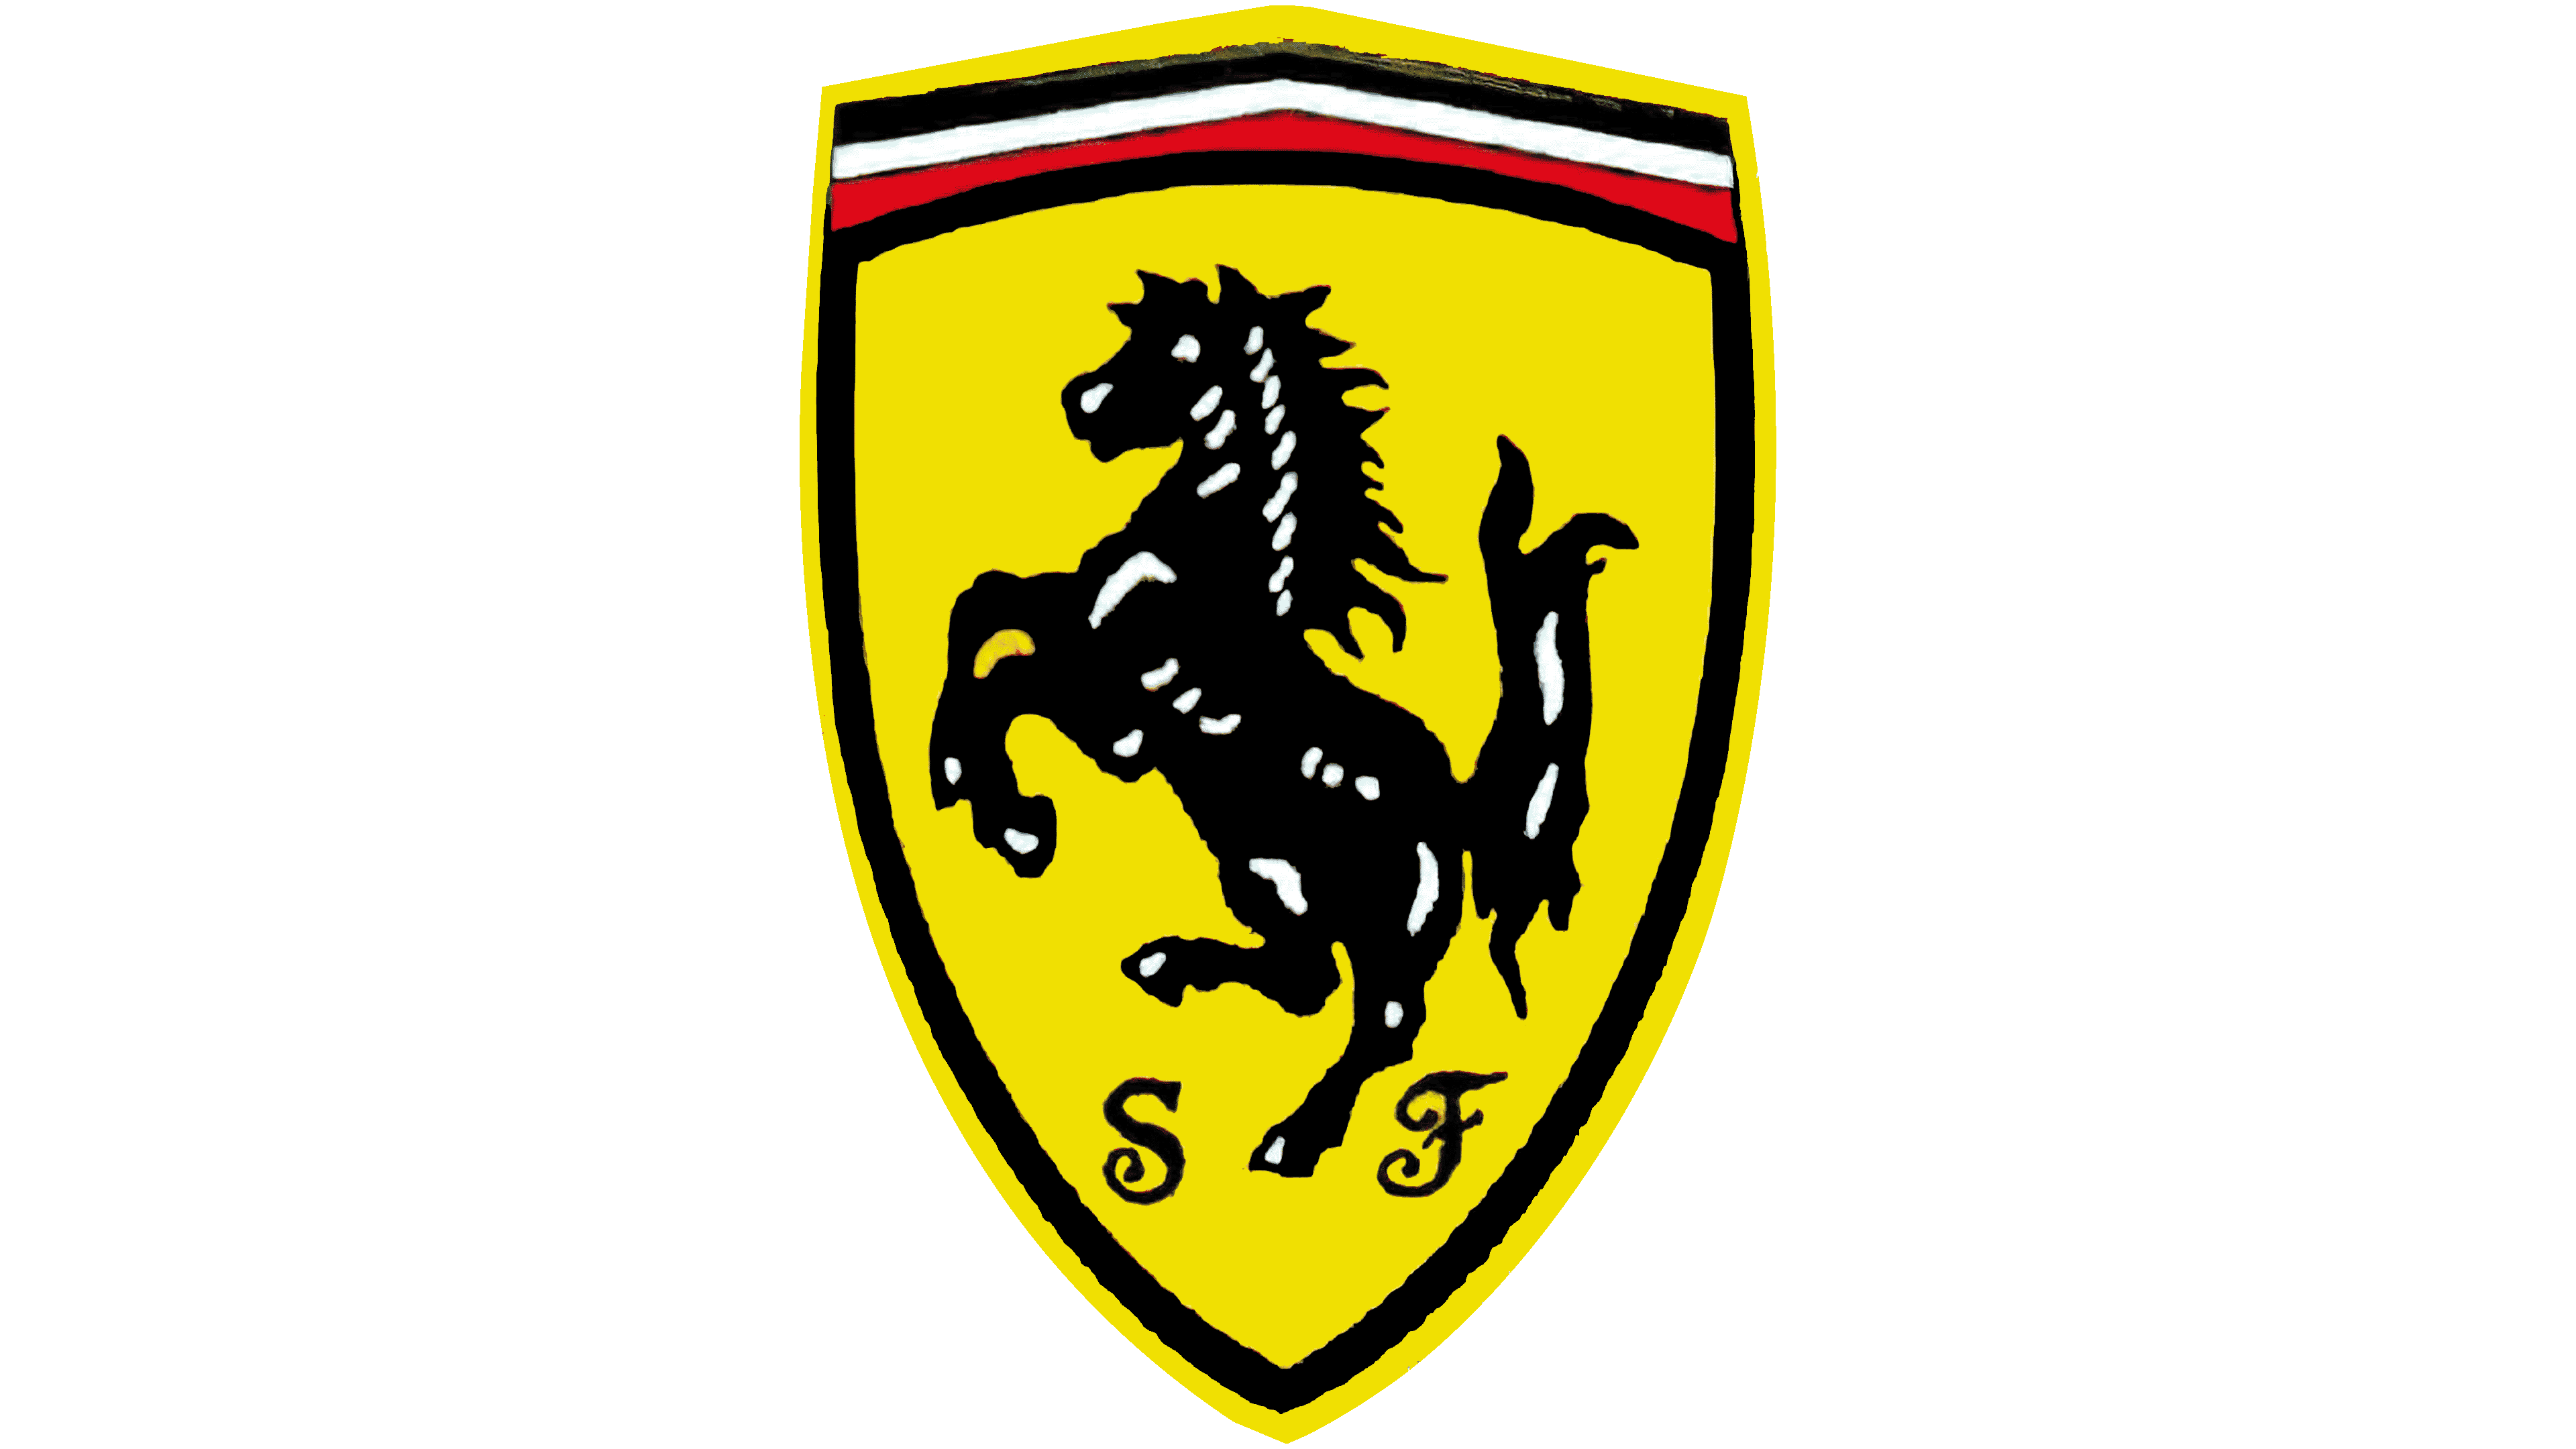 Charles Leclerc simple Ferrari logo 